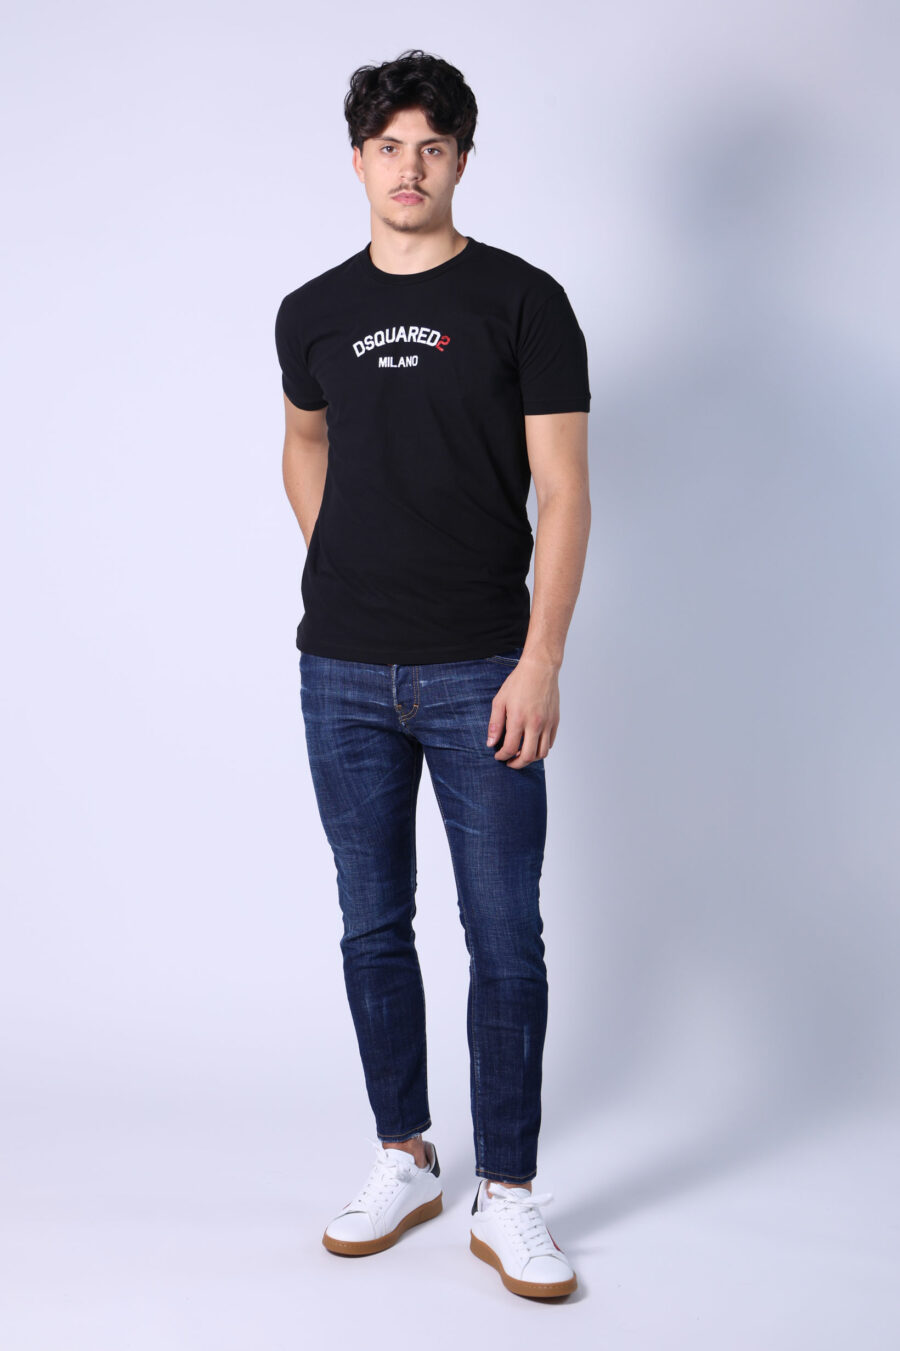 Camiseta negra con minilogo "dsquared2 milano" - Untitled Catalog 05471